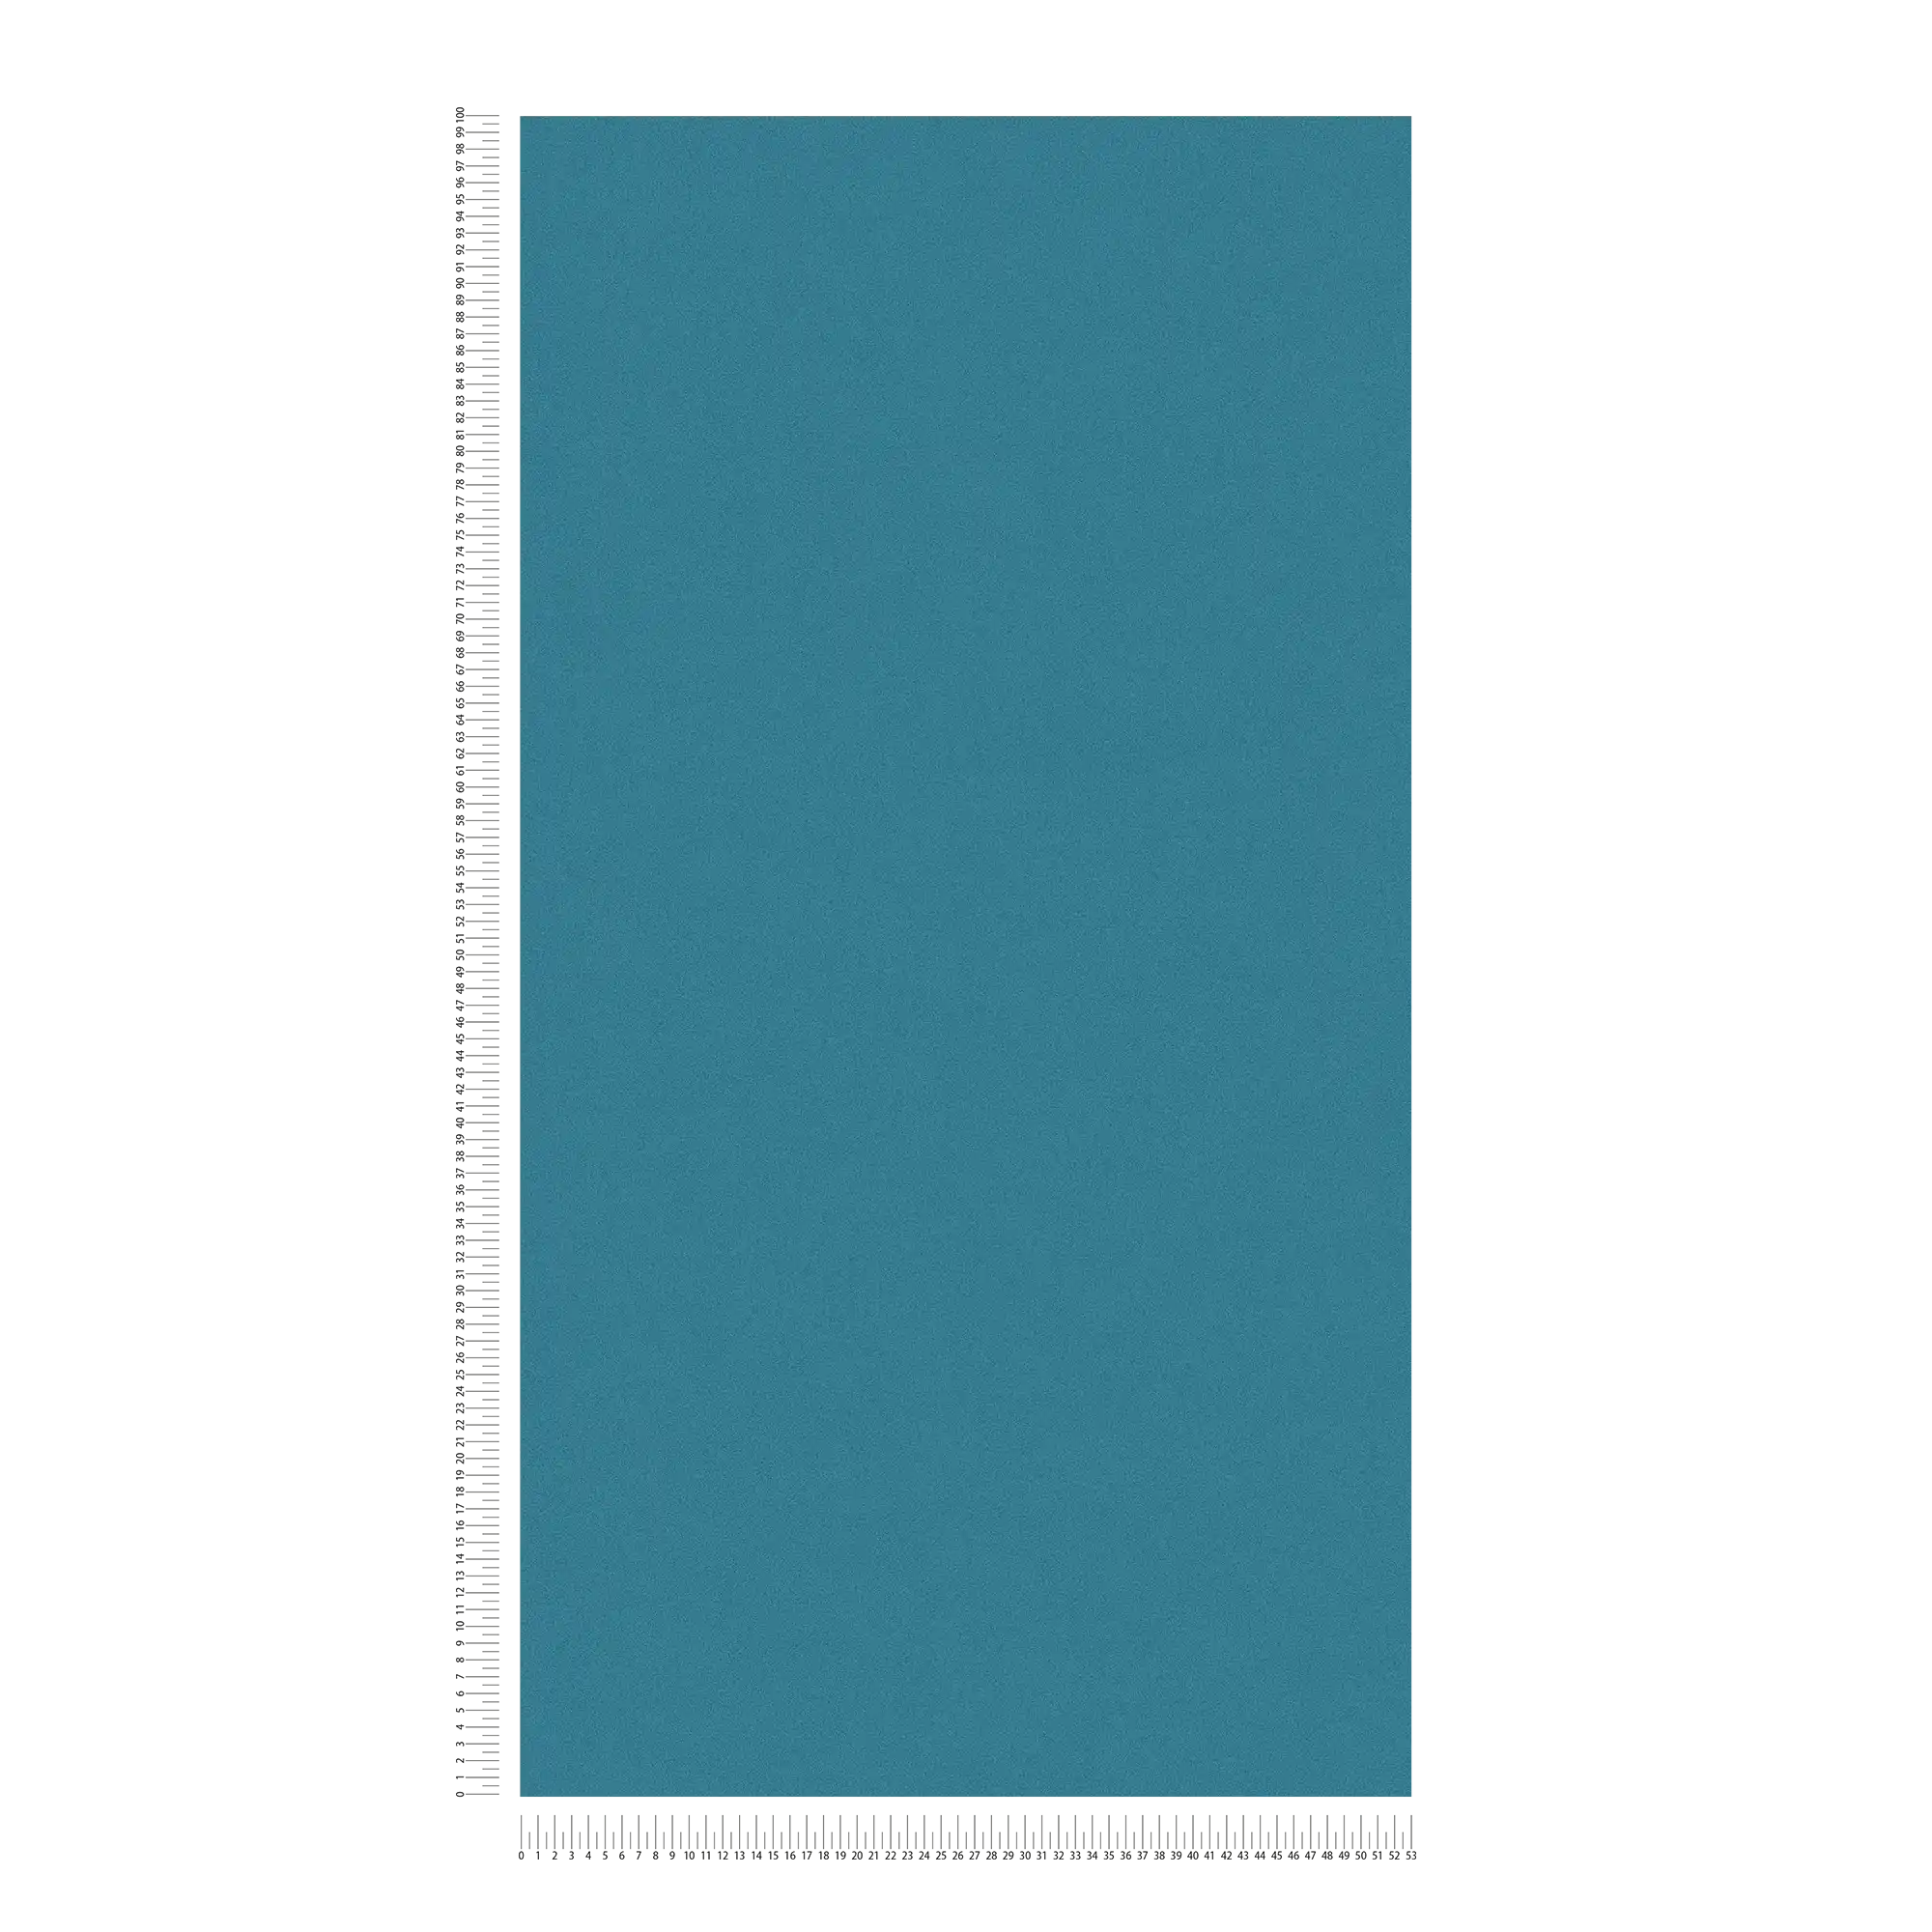             papel pintado azul turquesa oscuro, seda mate brillo y textura
        